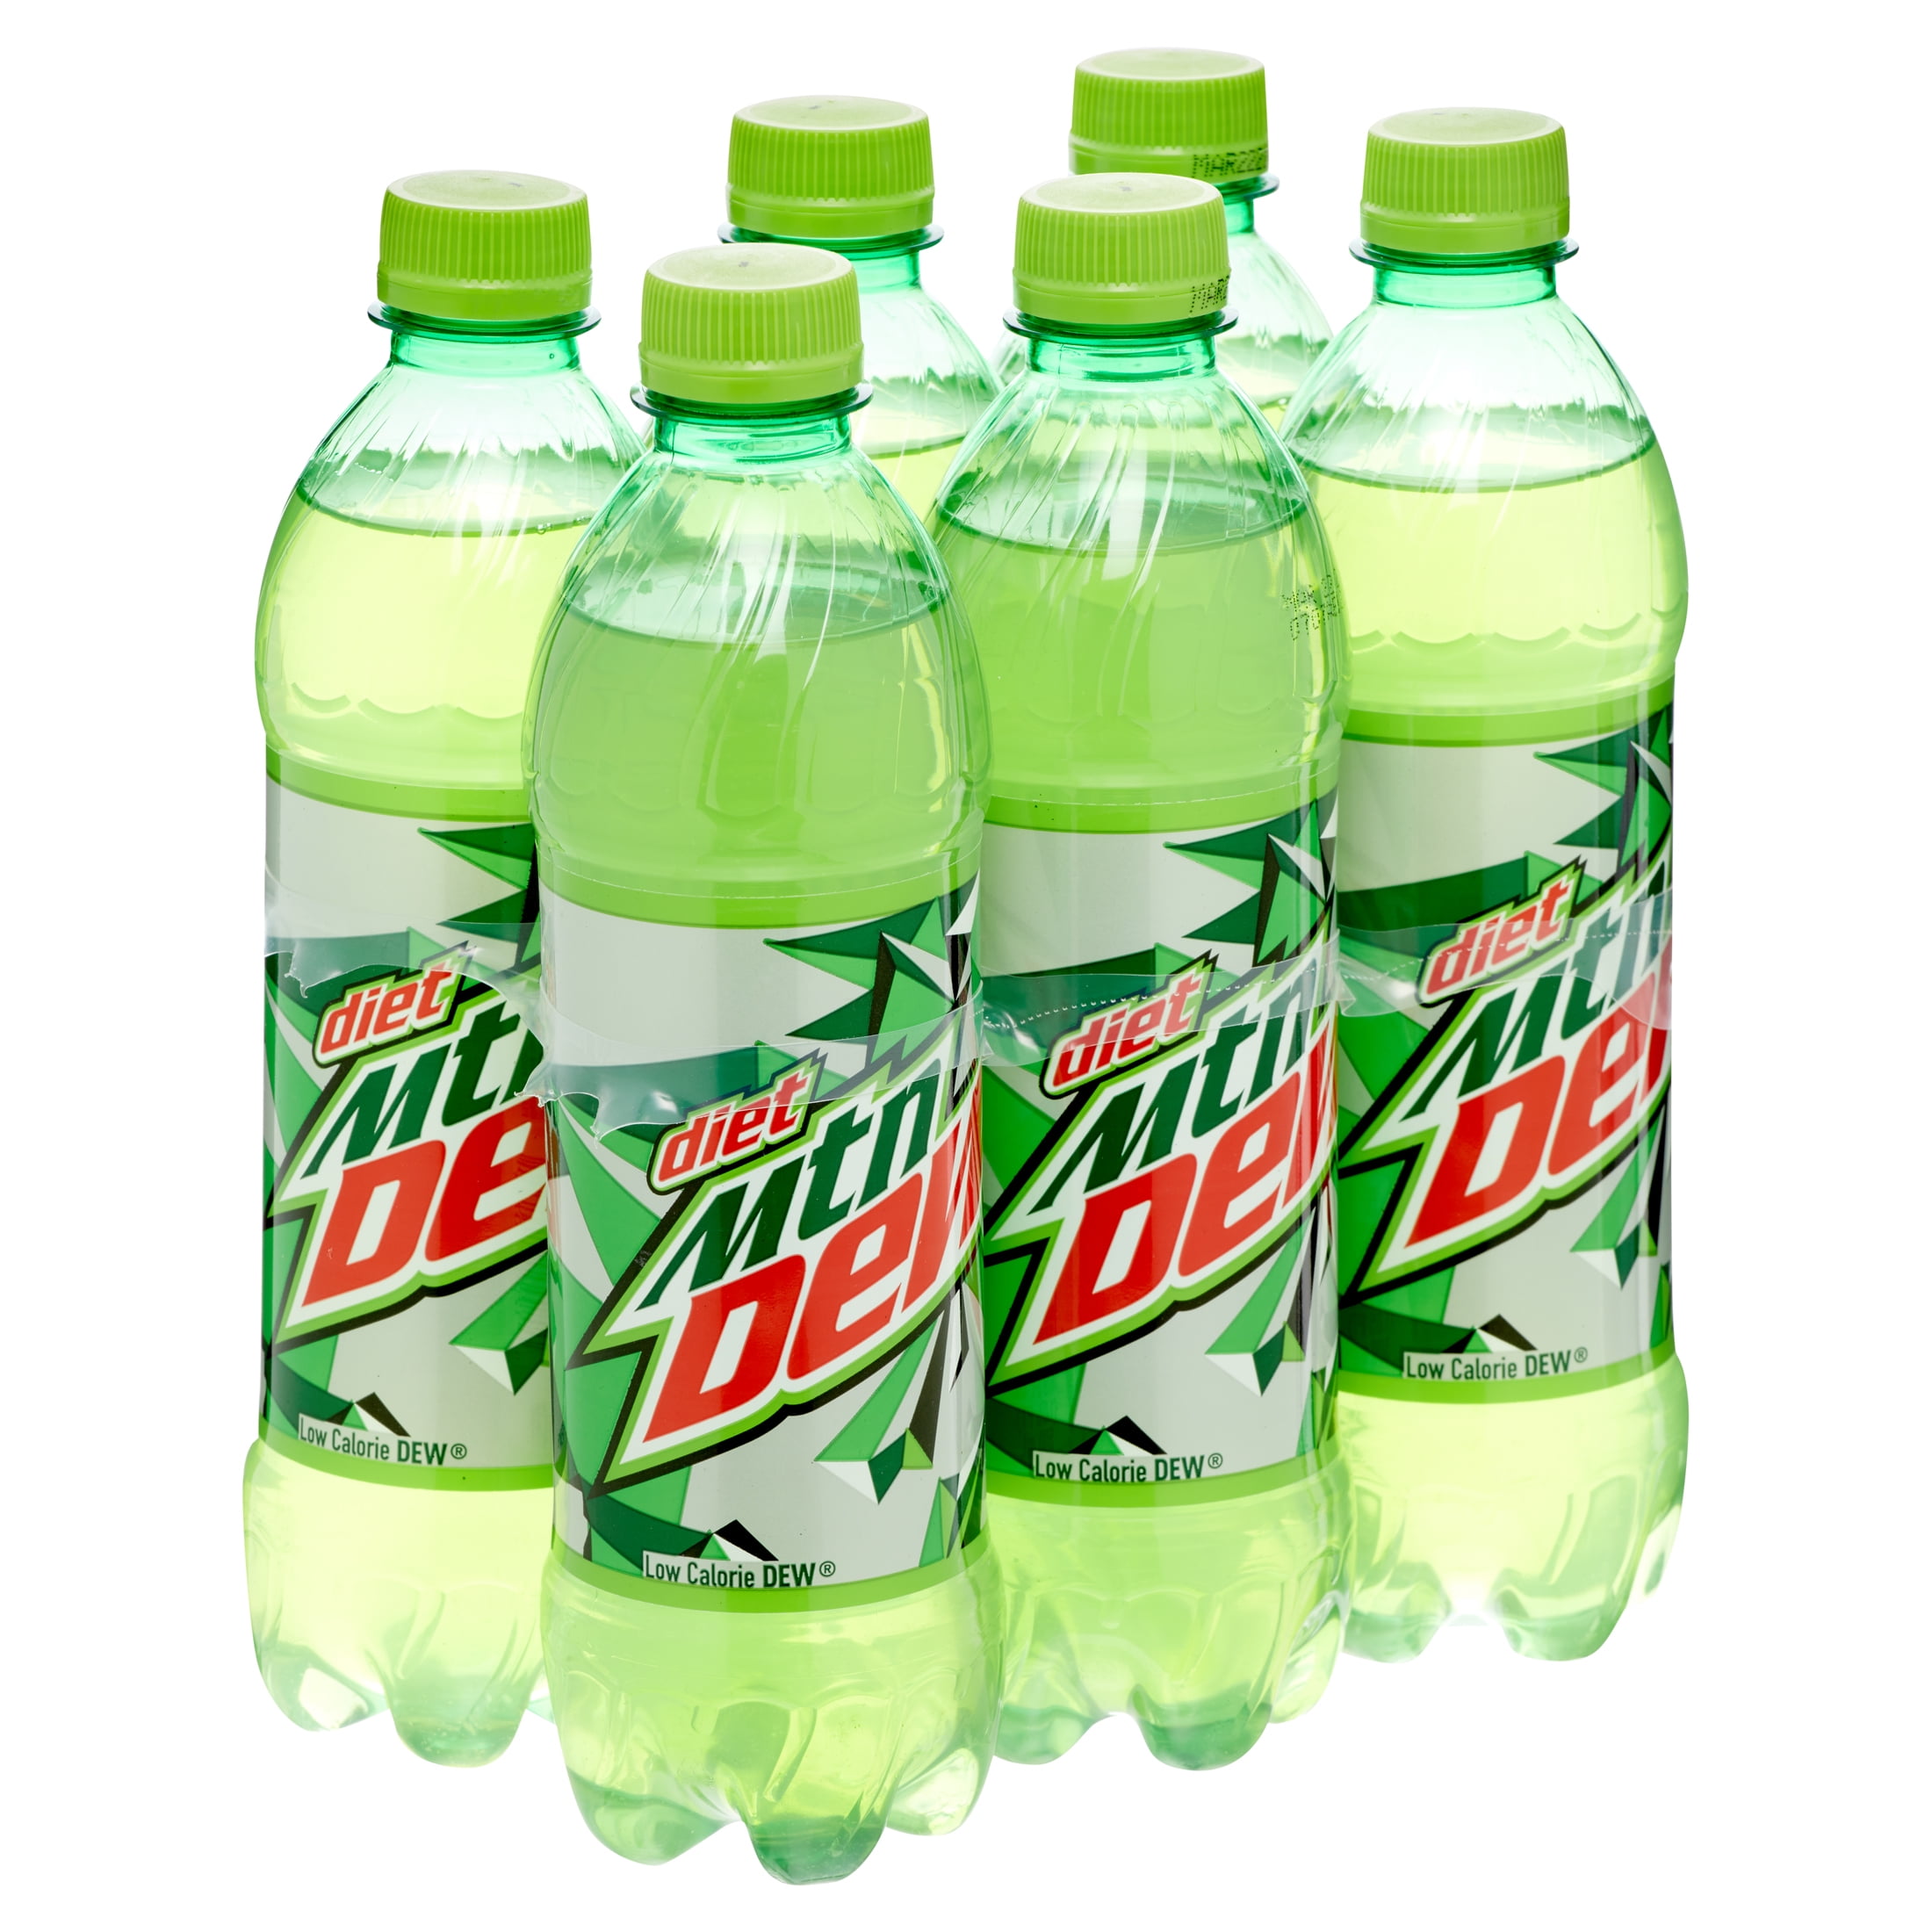 6 Bottles Diet Mountain Dew Soda 16 9 Fl Oz Walmart Com Walmart Com